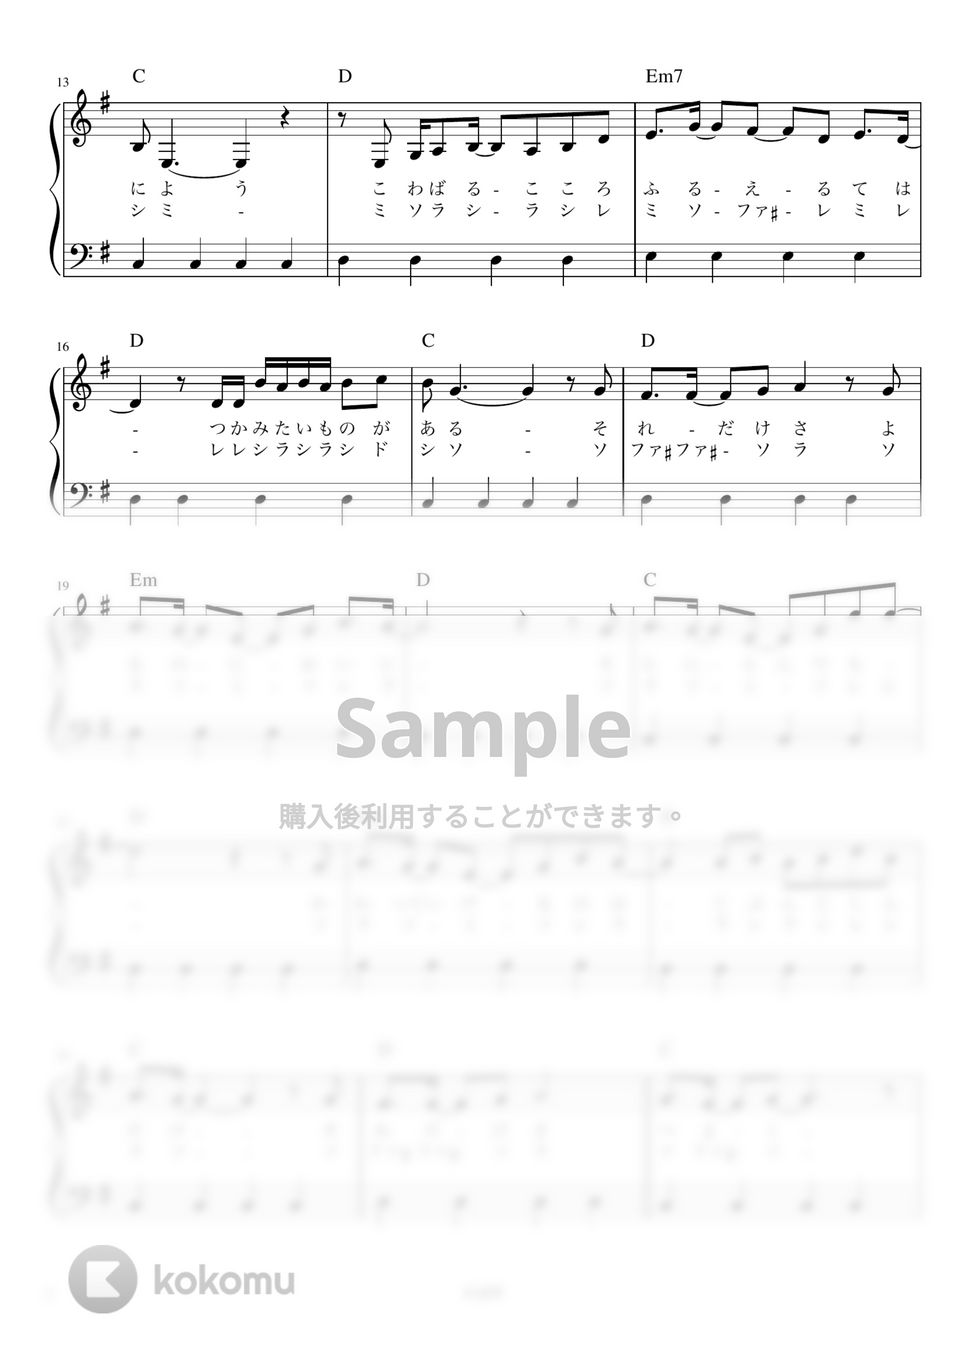 LiSA - 紅蓮華 (ピアノ かんたん 歌詞付き ドレミ付き 初心者) by piano.tokyo